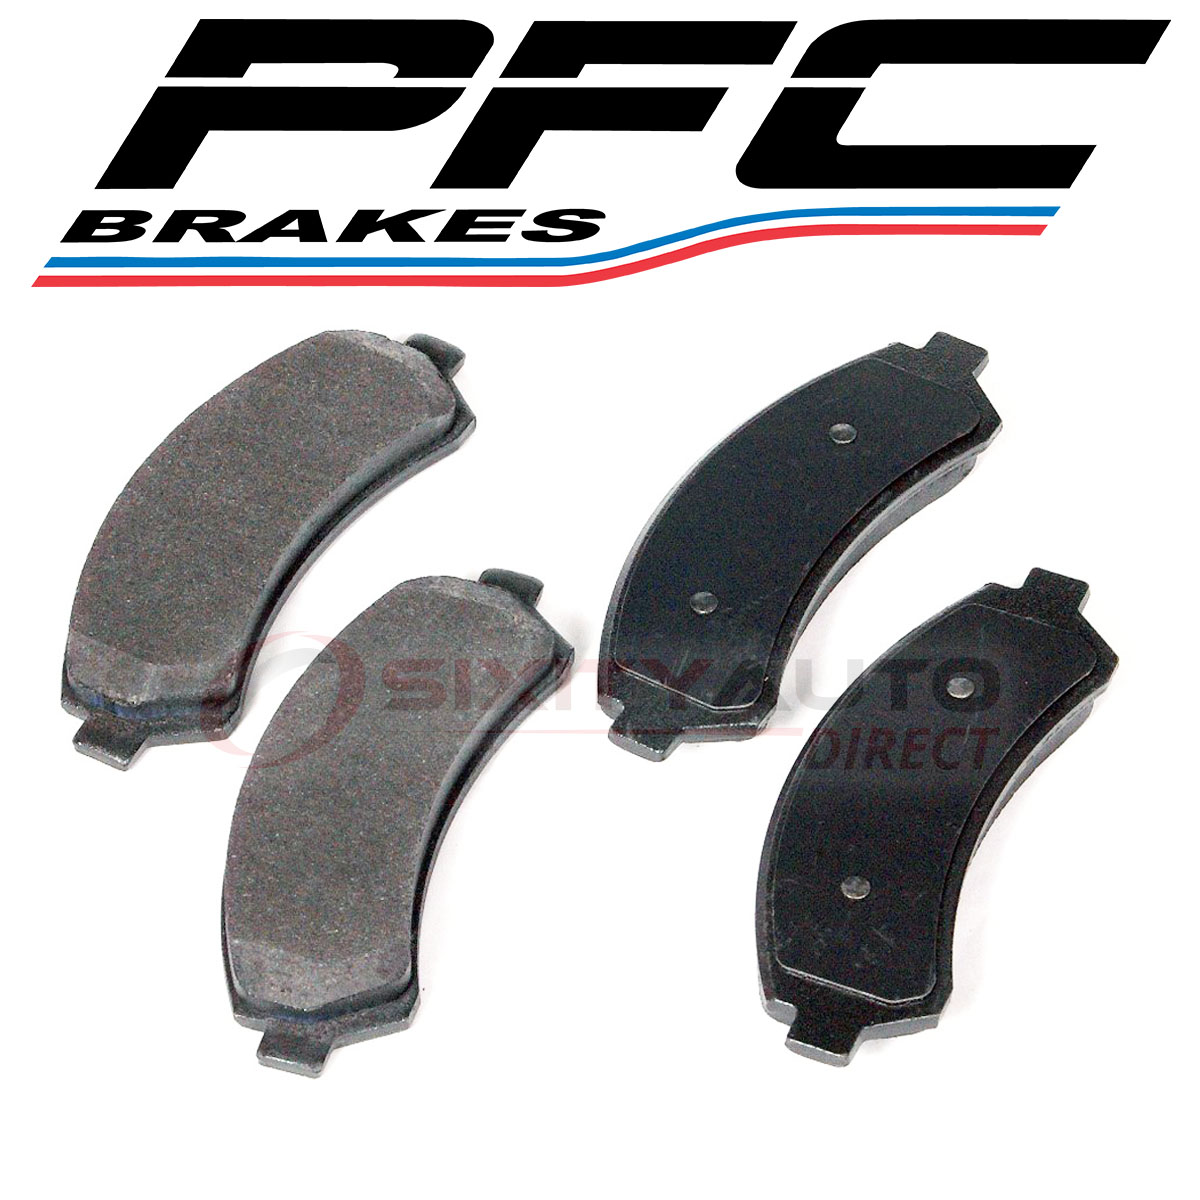 PFC Brakes Front Disc Brake Pad Set for 1997-2005 Chevrolet Blazer - Braking gn | eBay 2001 Chevy Blazer Emergency Brake Not Working